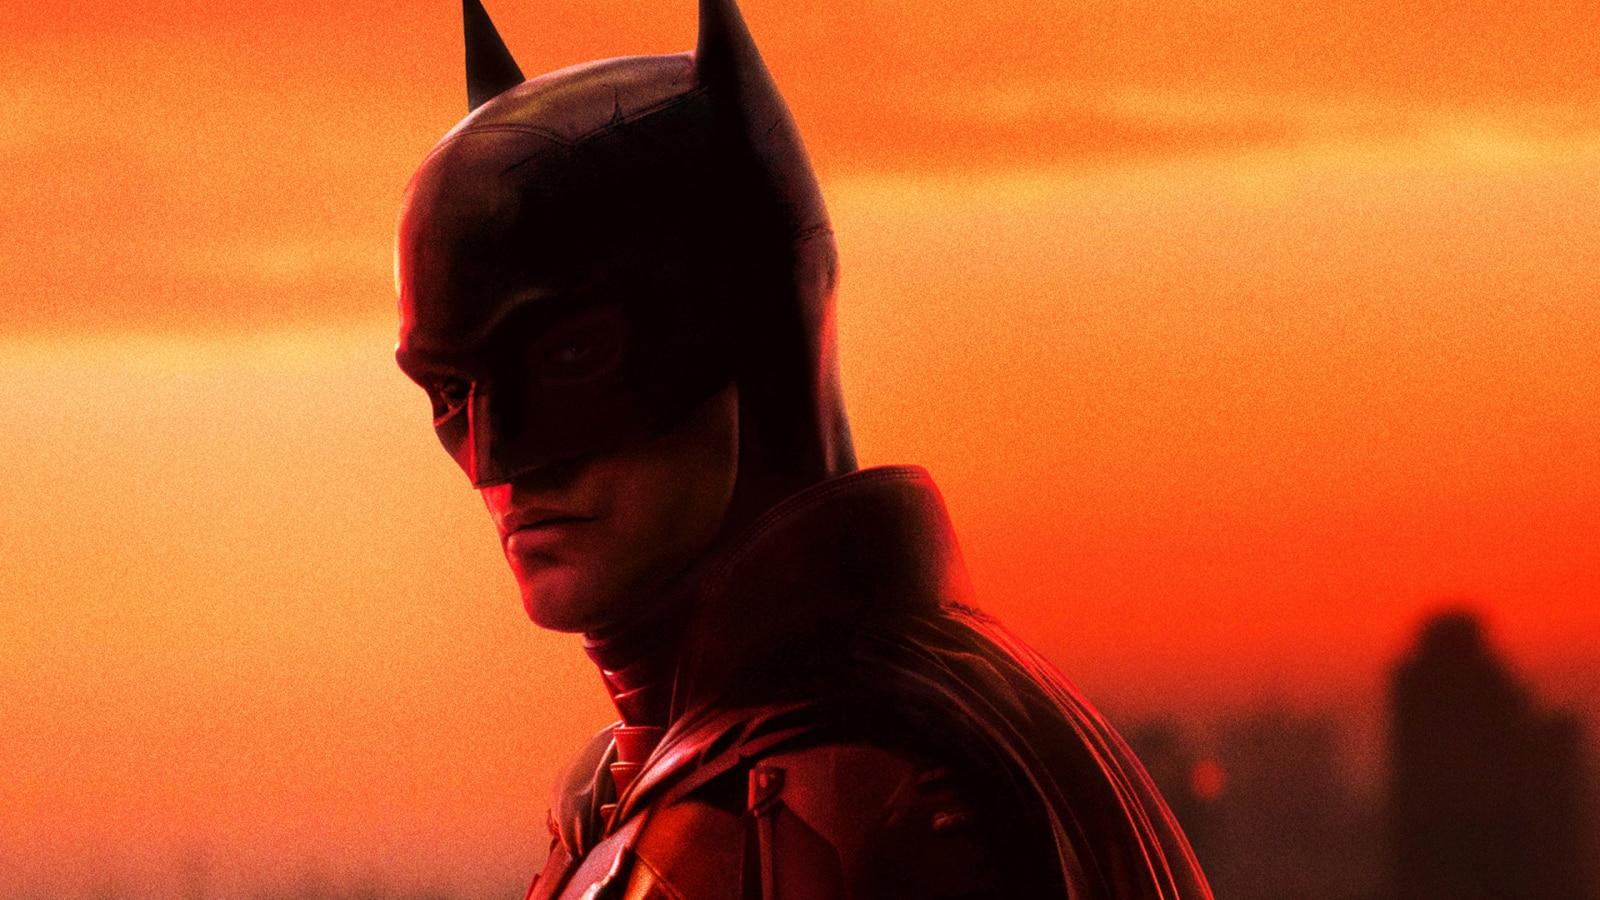 Robert Pattinson as the batman against an orange sky